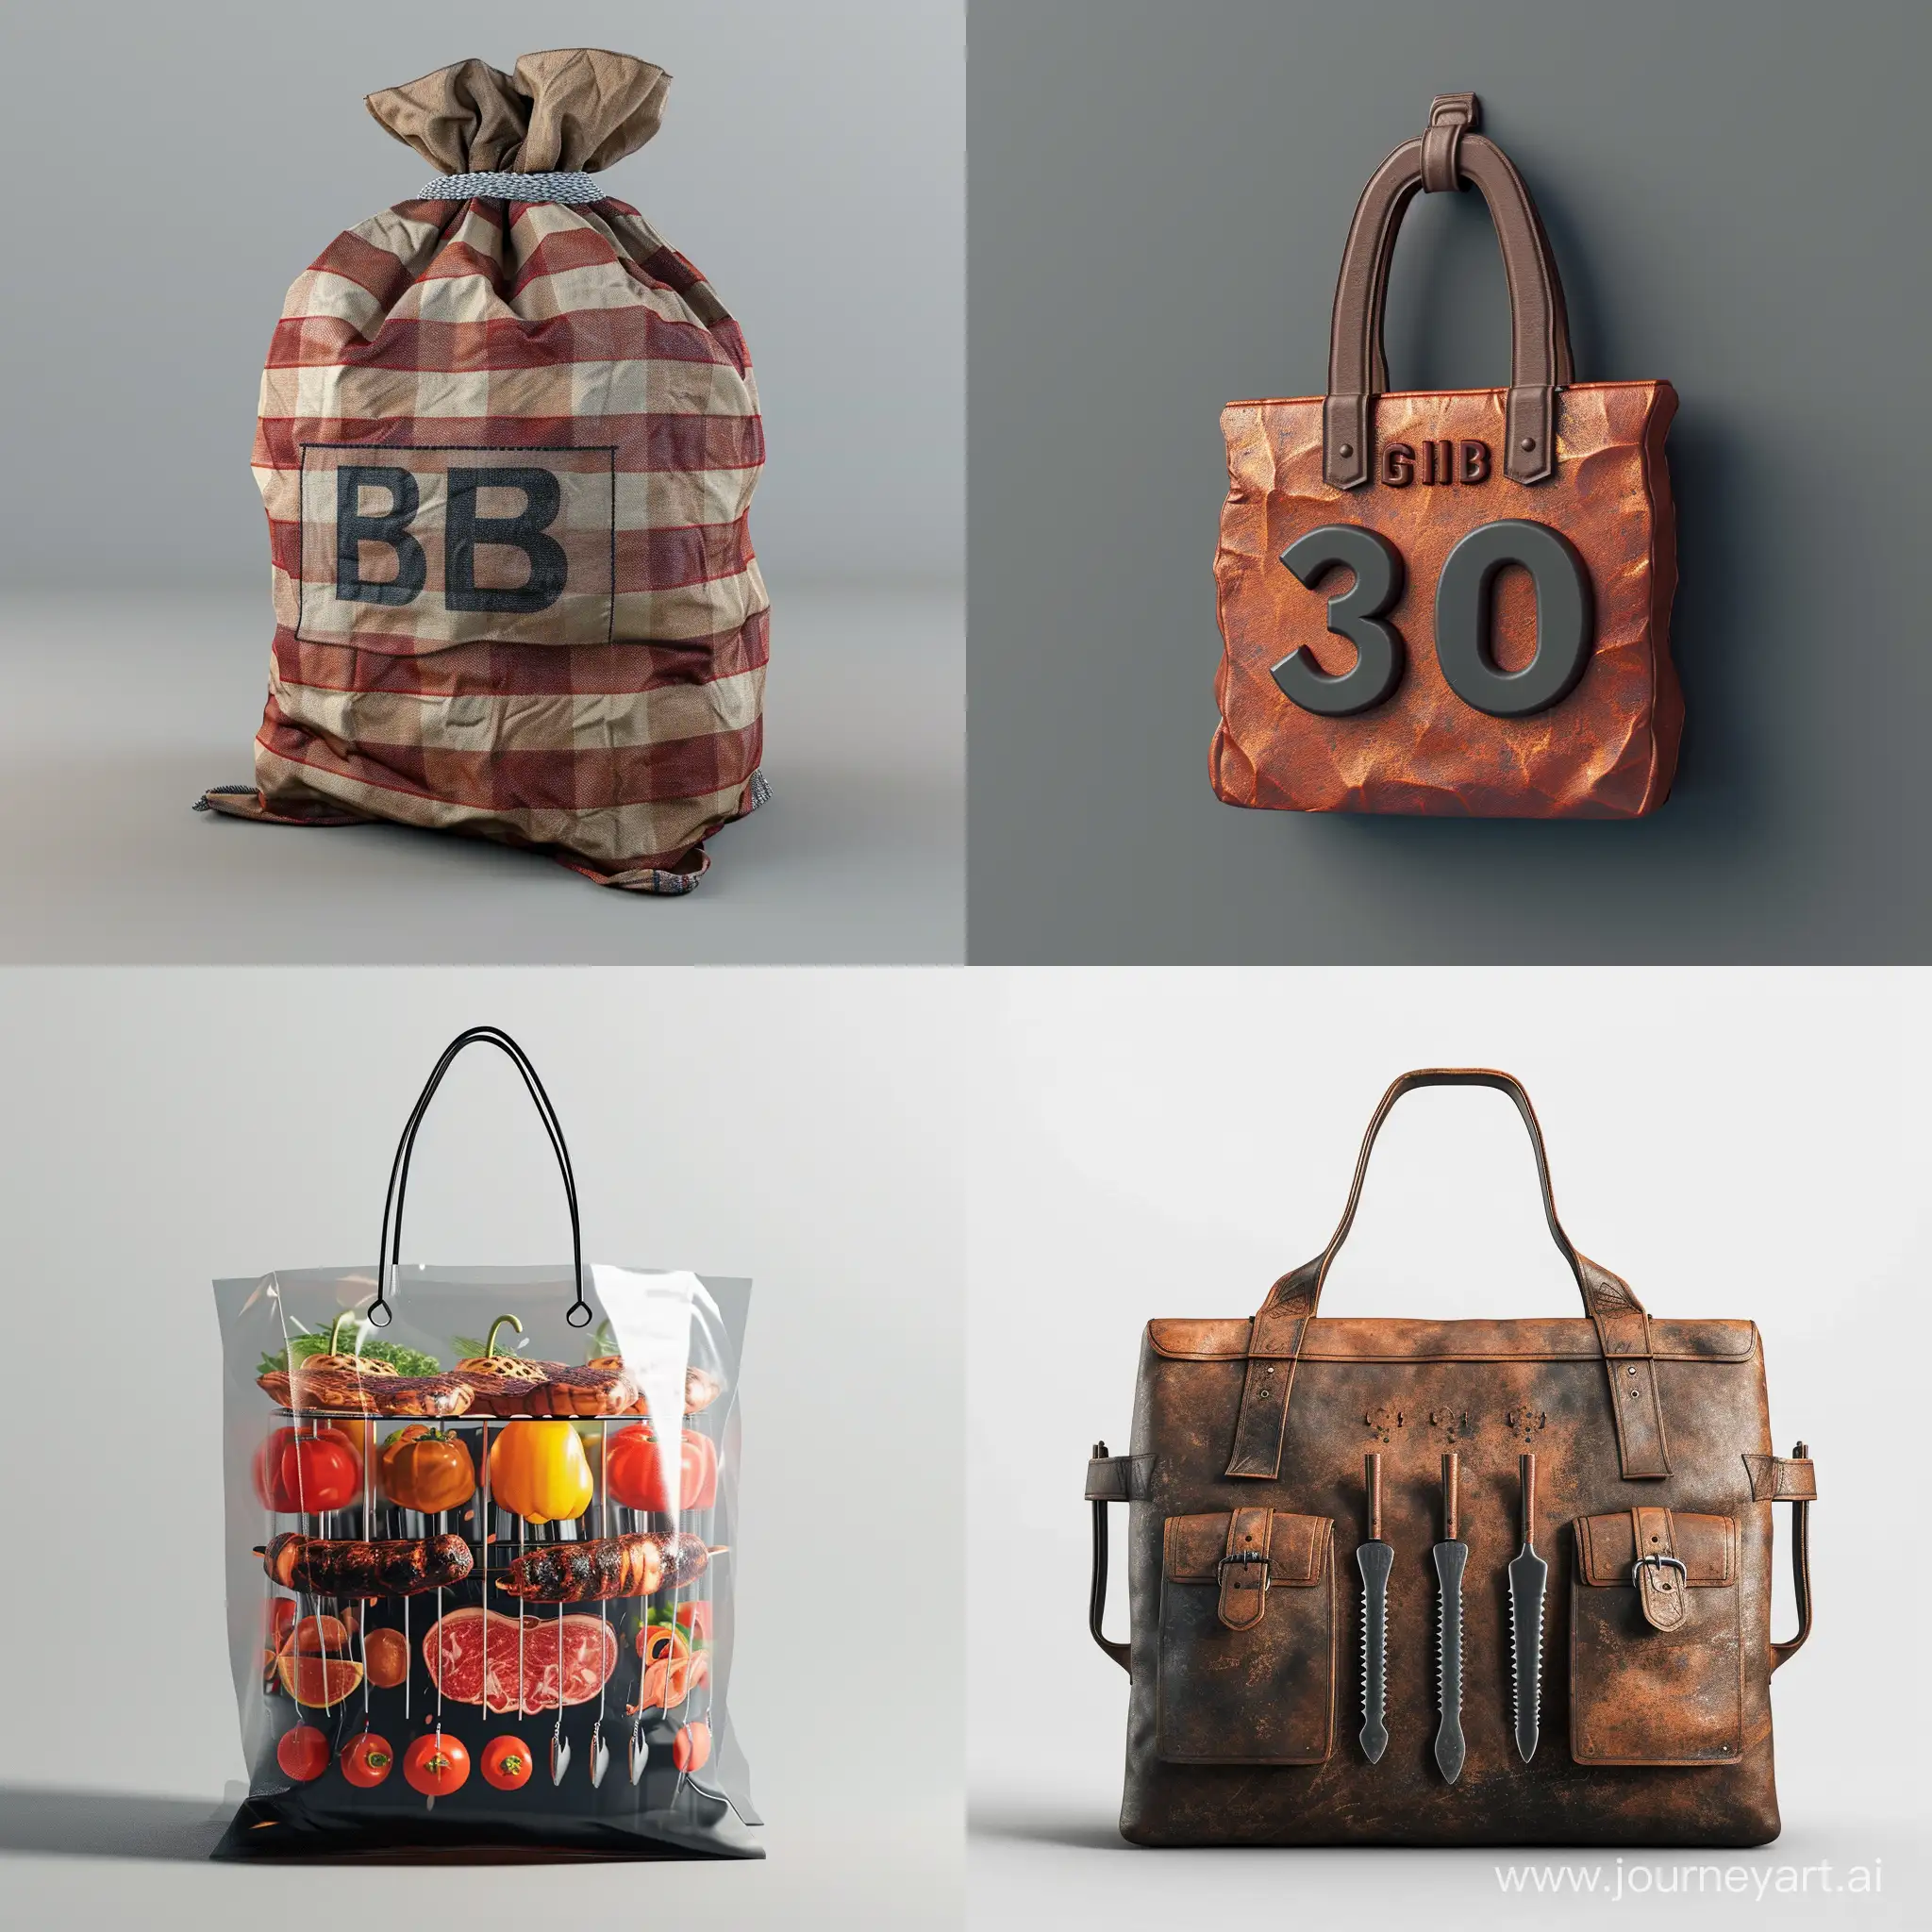 Vibrant-3D-BBQ-Bag-Design-with-Artistic-Flair